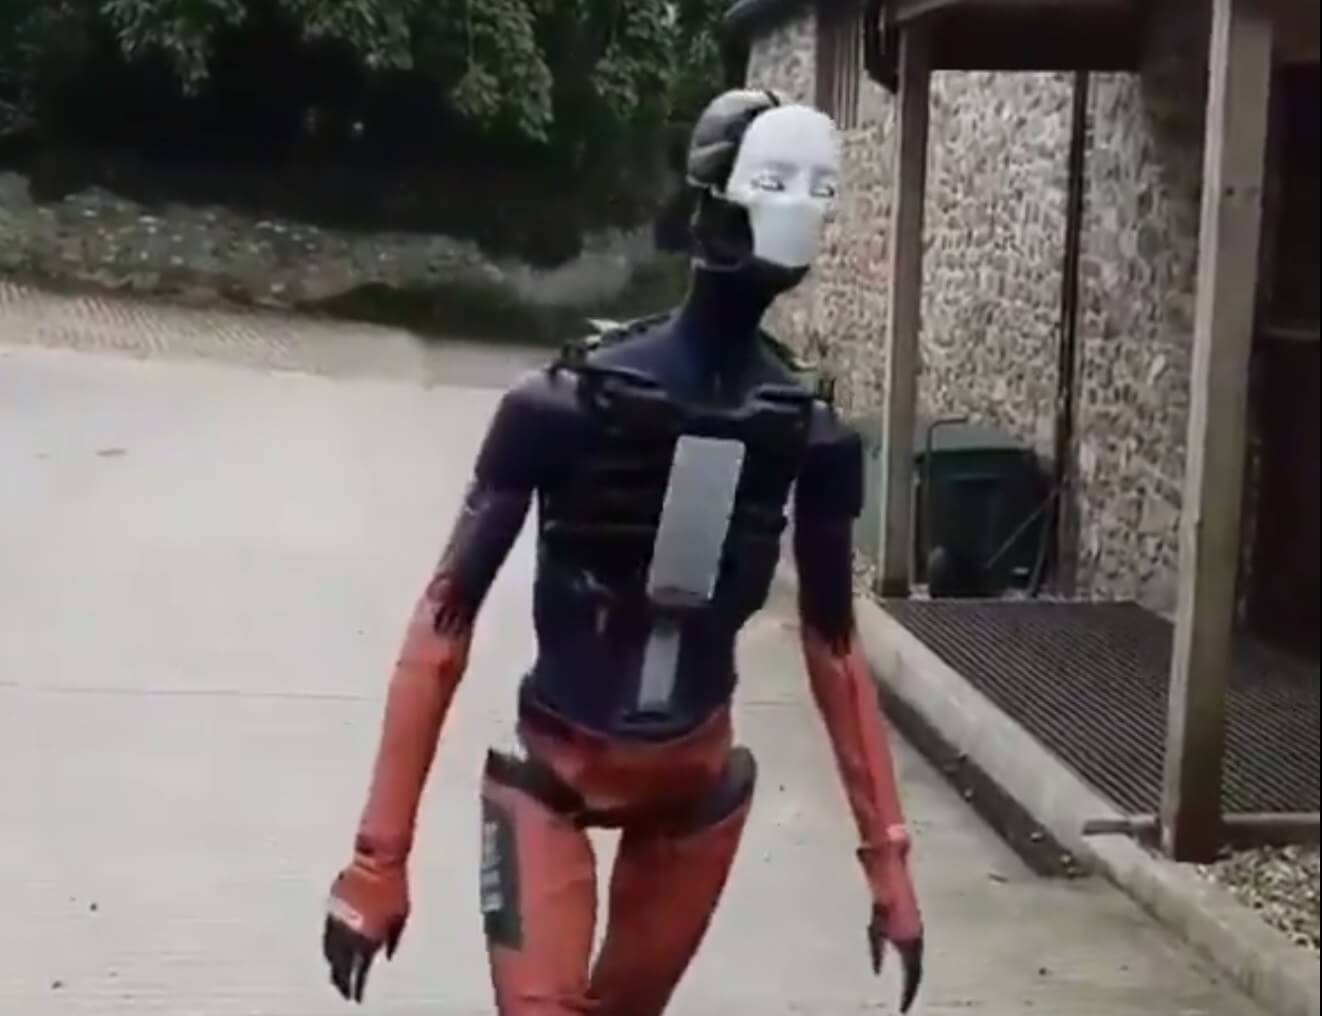 Humanoid robot video that terrified the internet isn't real | TechSpot